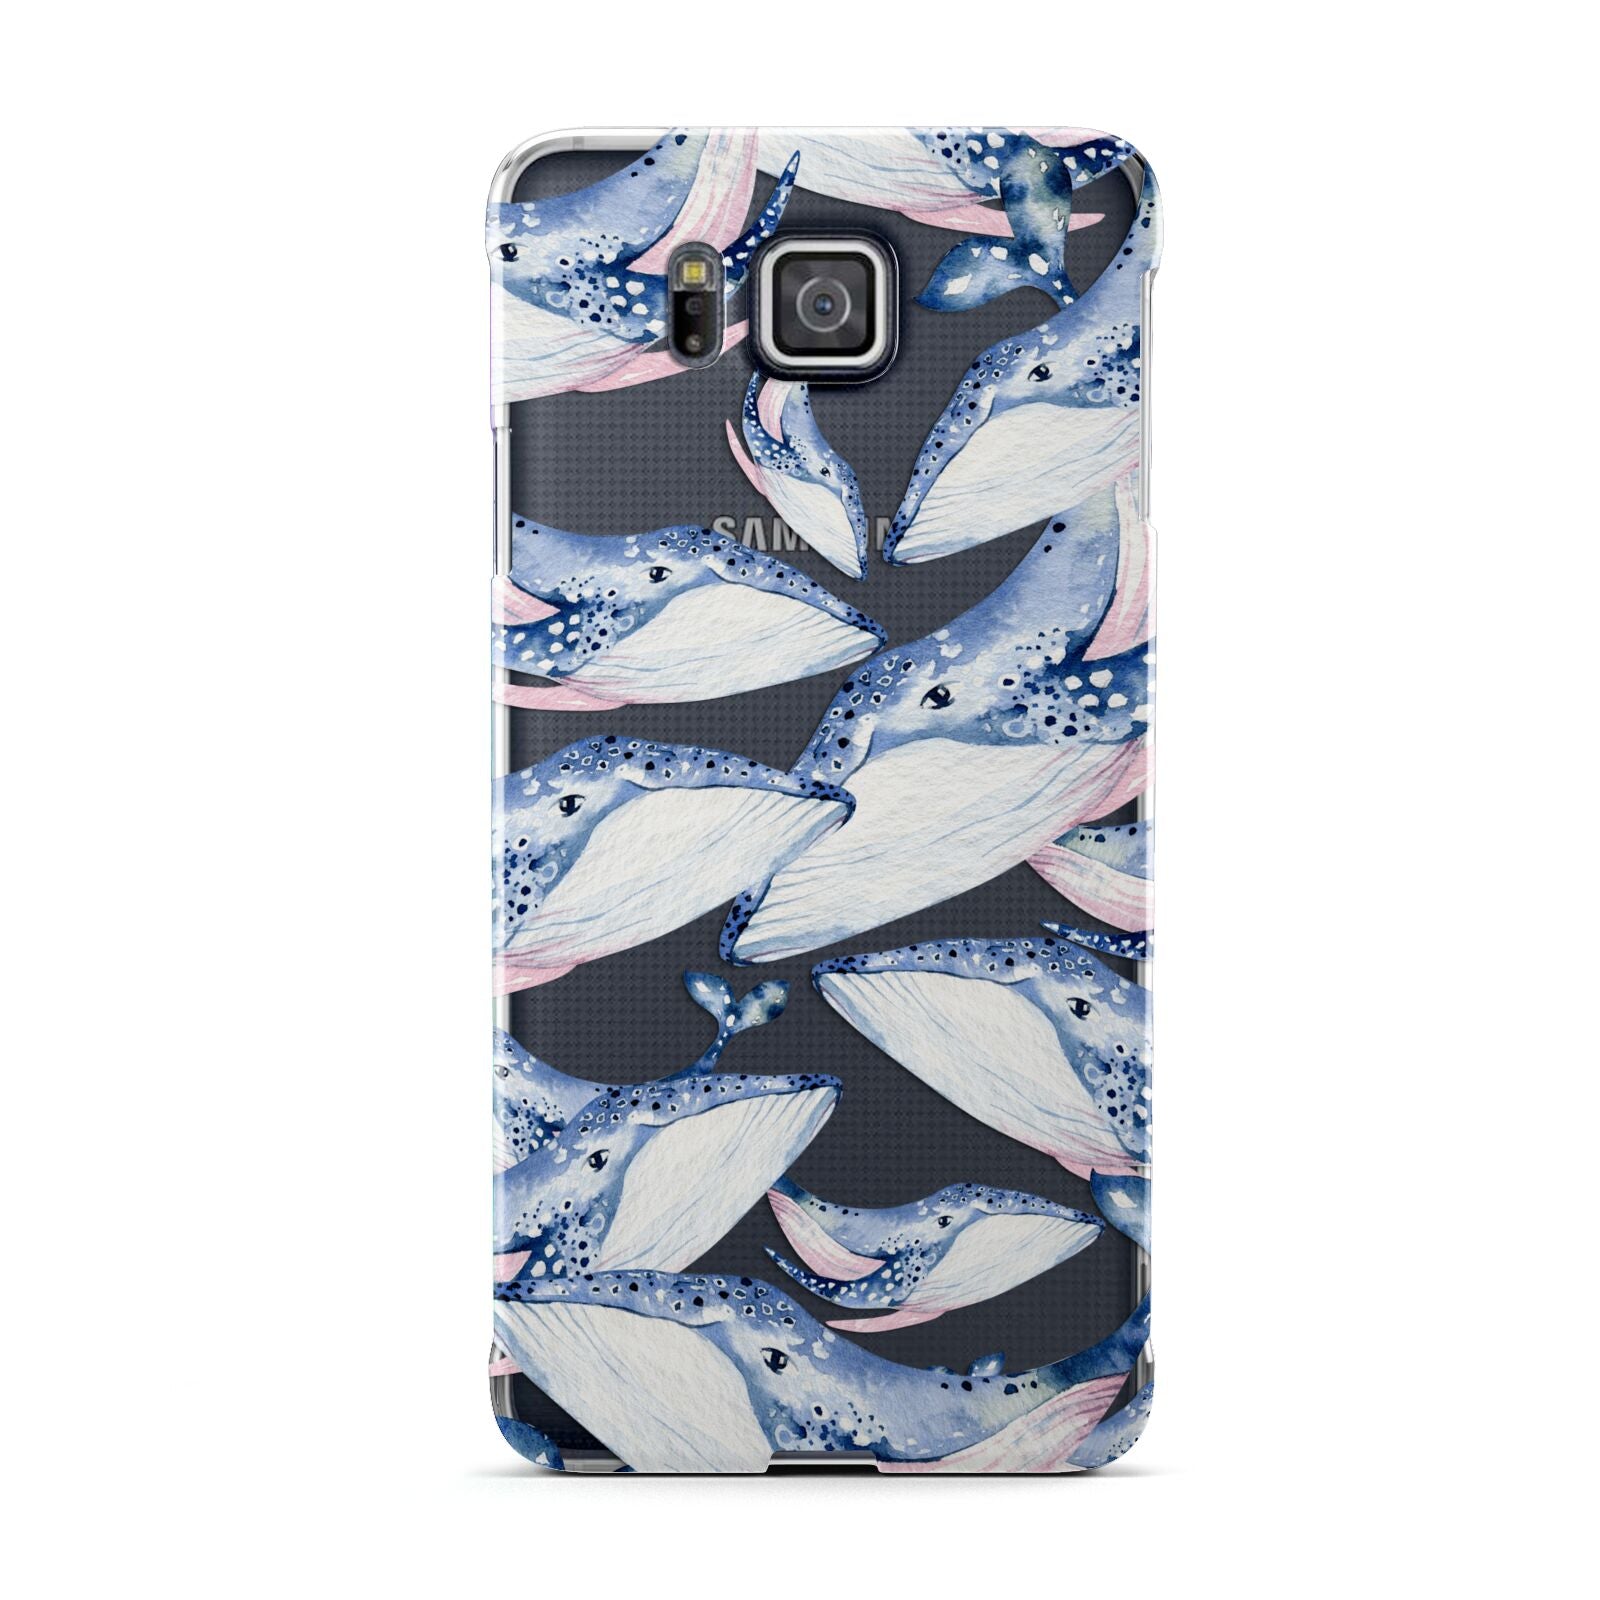 Whale Samsung Galaxy Alpha Case